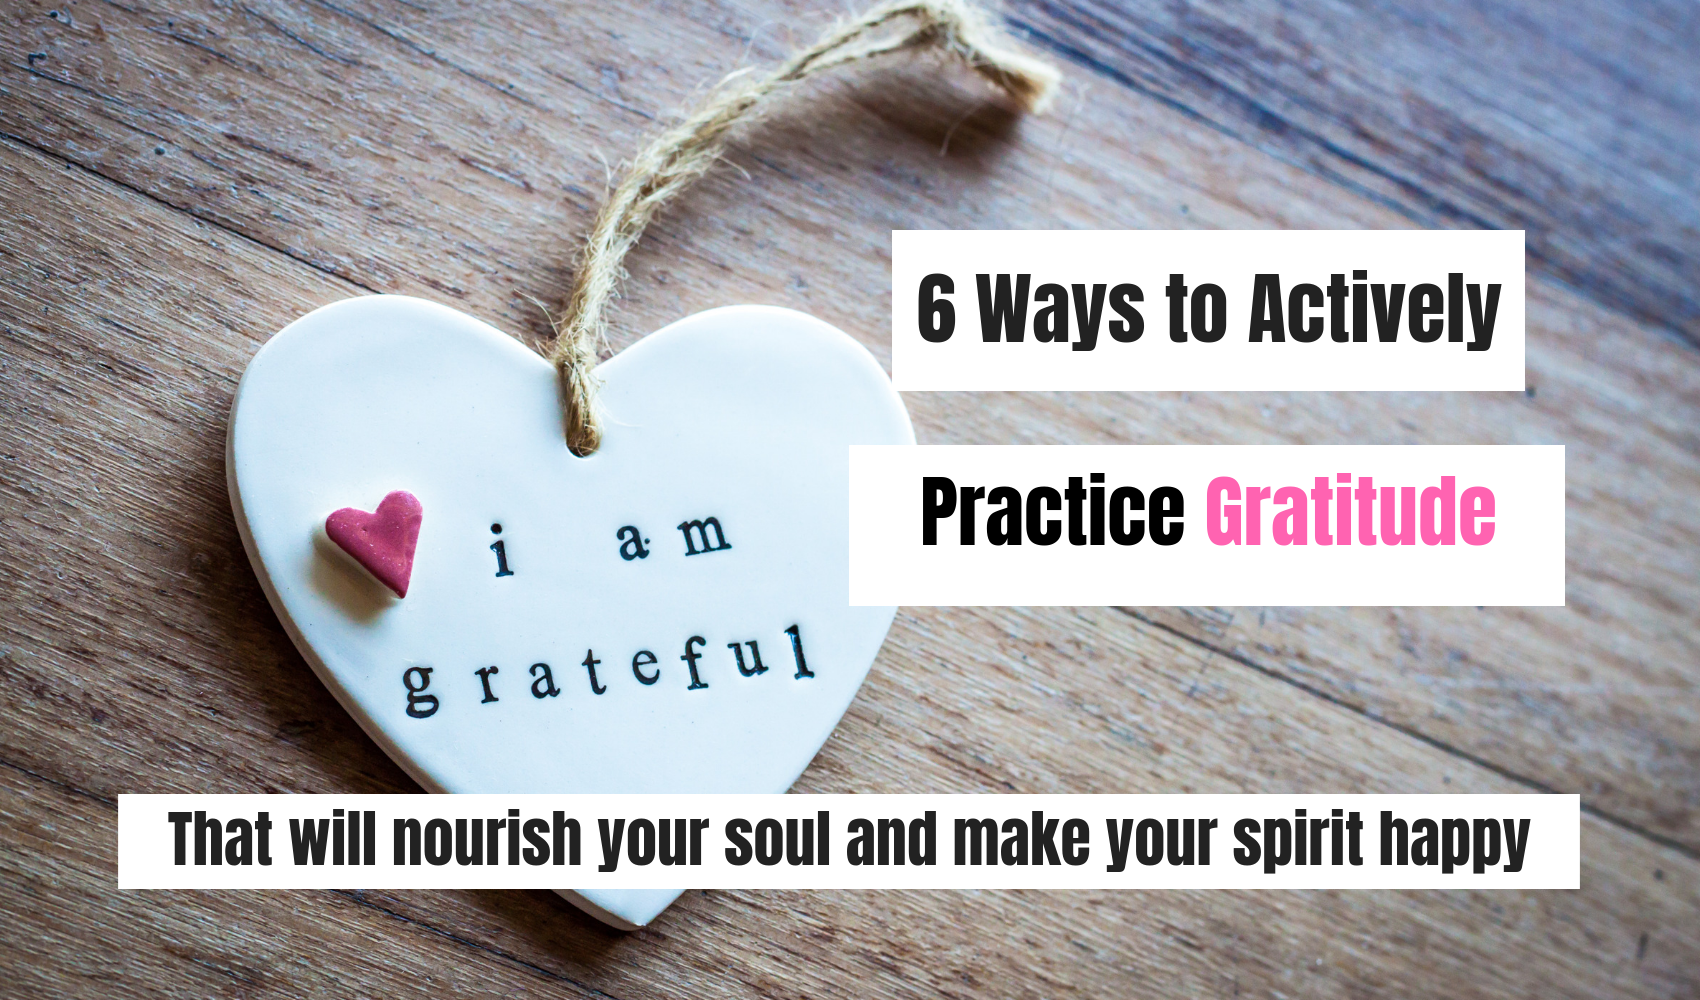 6 Ways to Actively Practice Gratitude